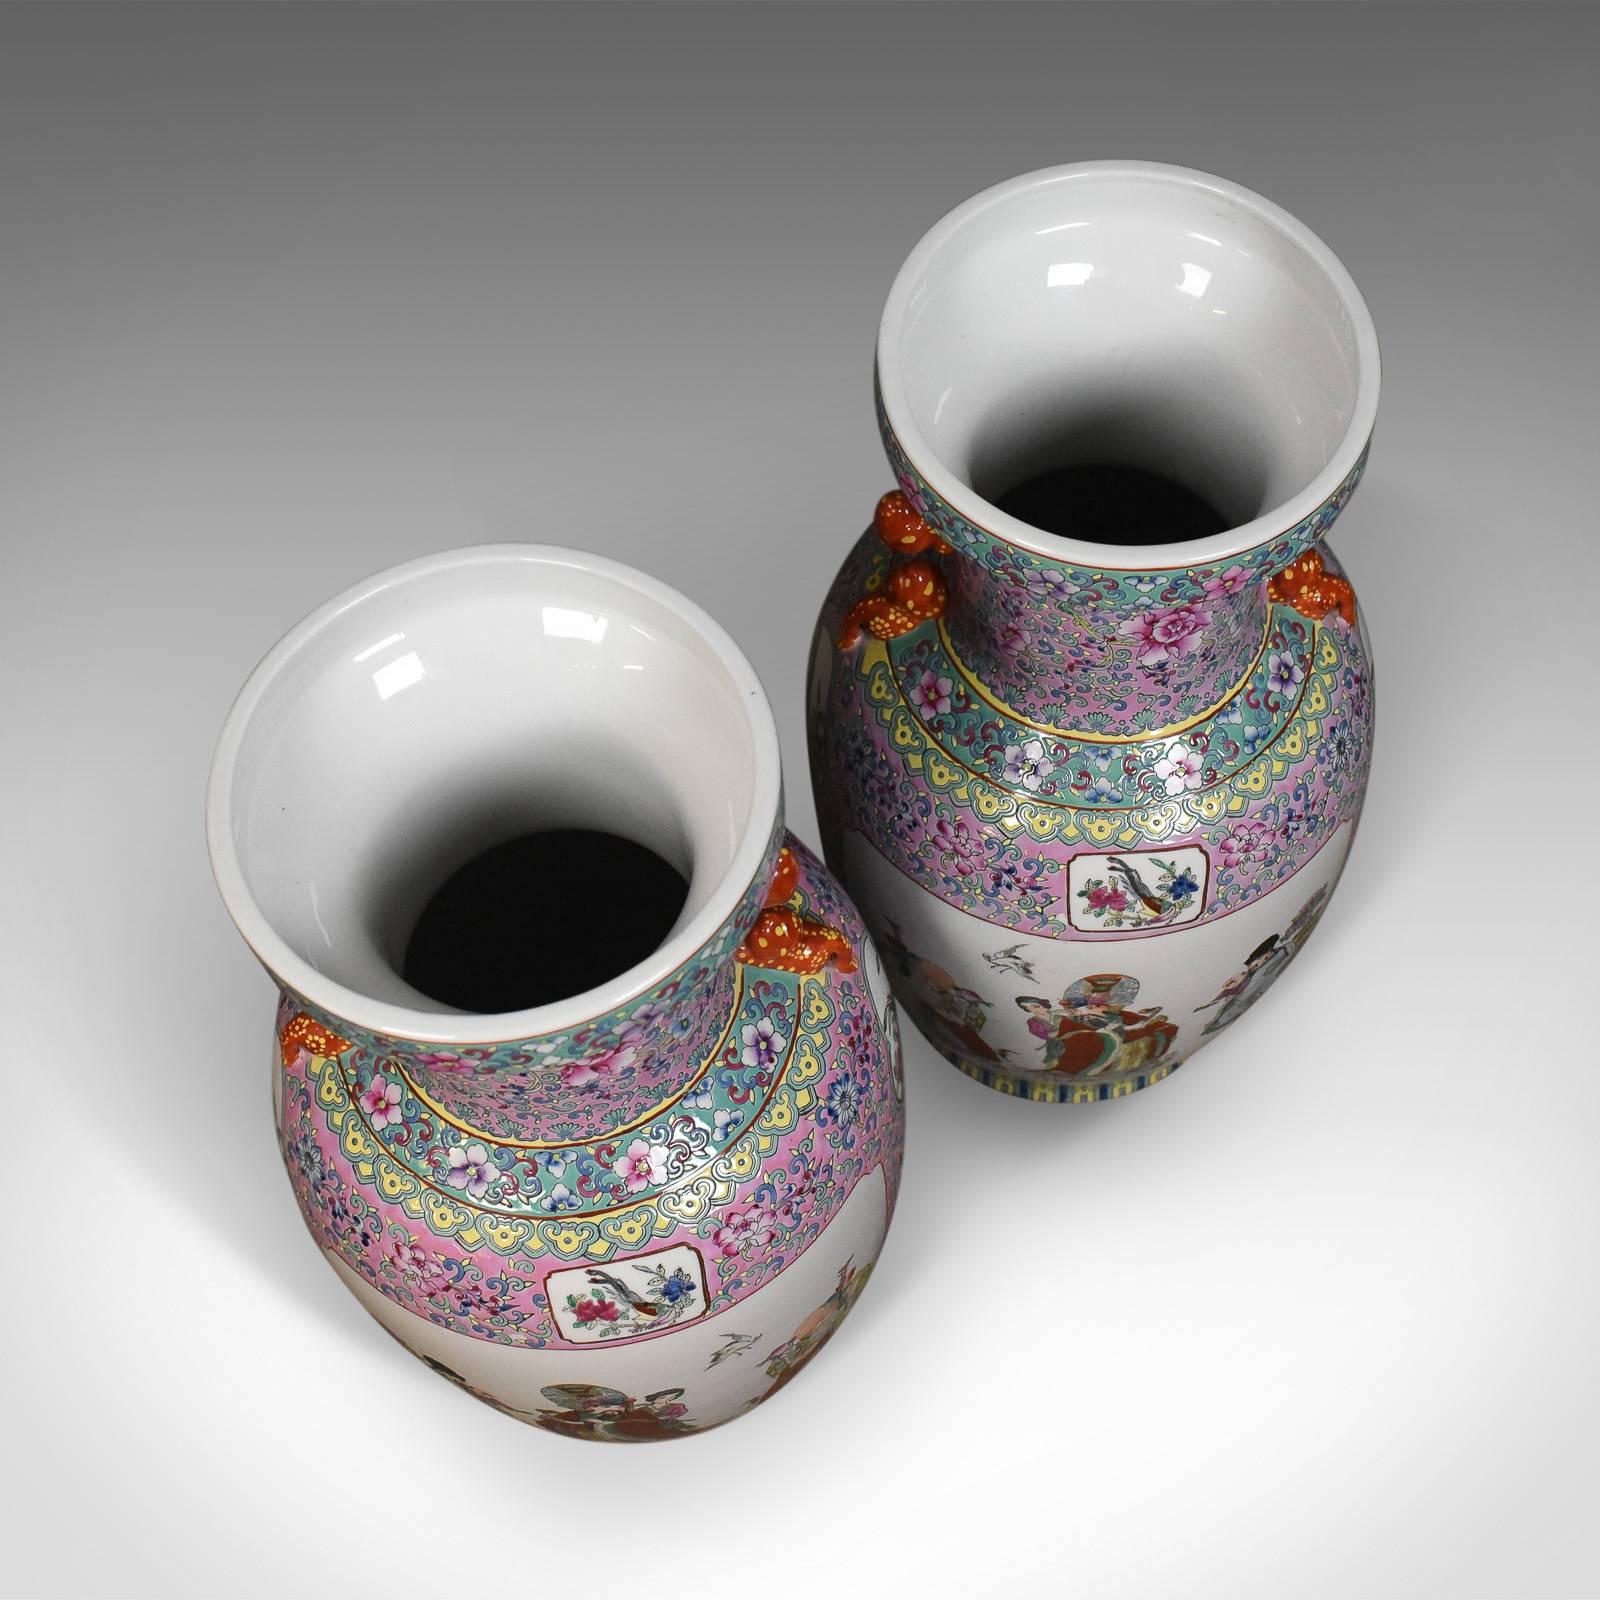 Midcentury Pair of Chinese Baluster Vases, Hand-Painted Ceramic Urns 1